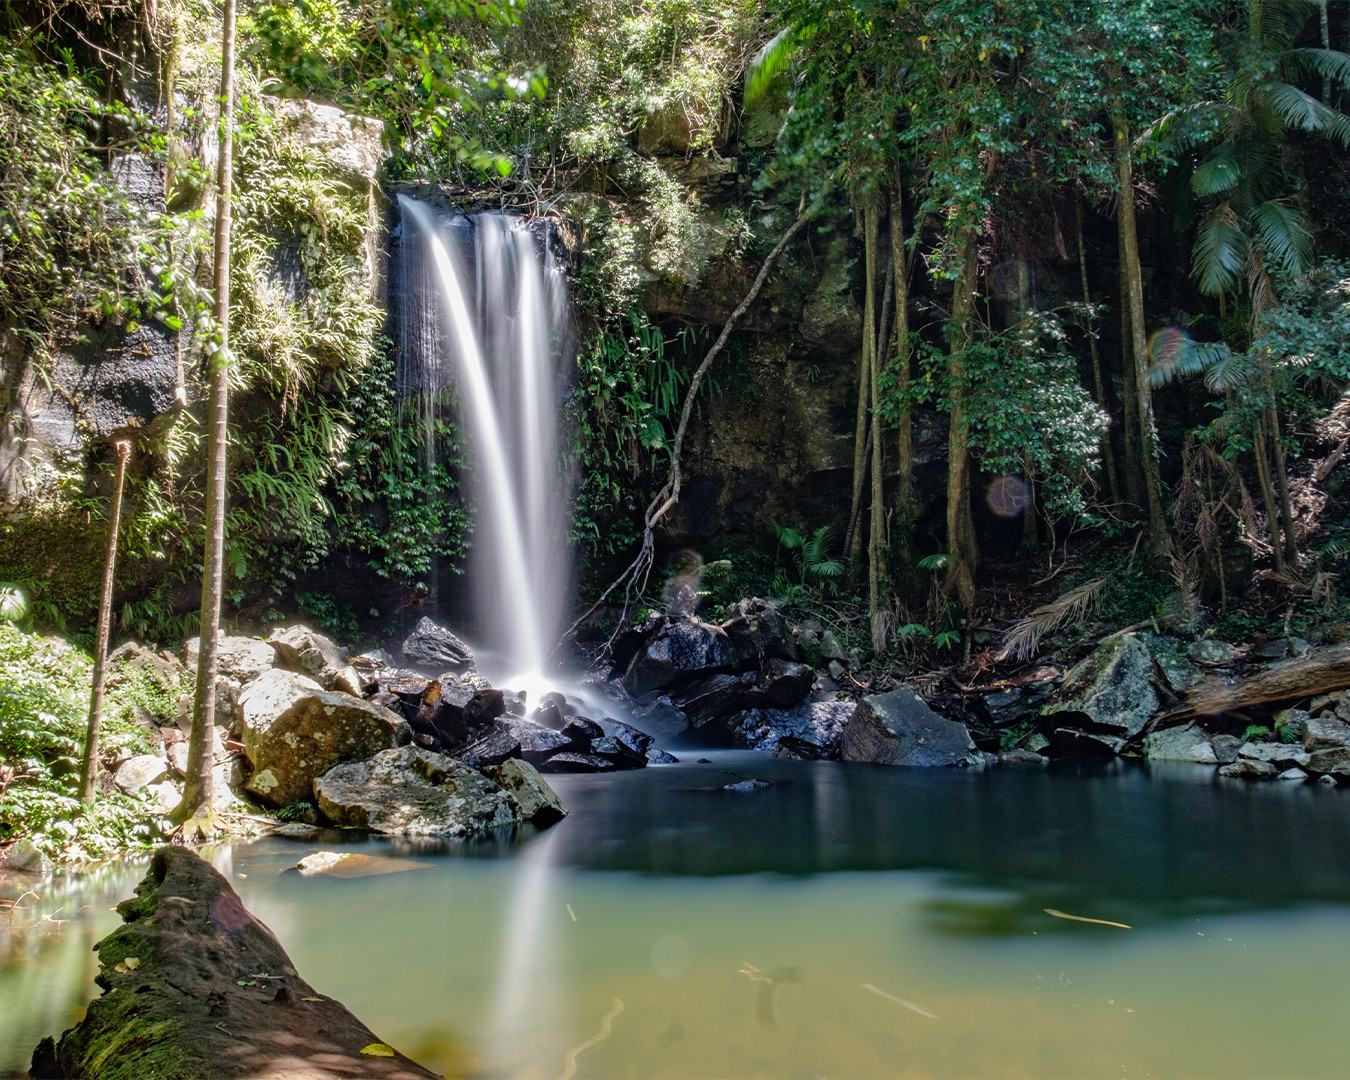 curtis falls, a waterfall in a rainforest near brisbane